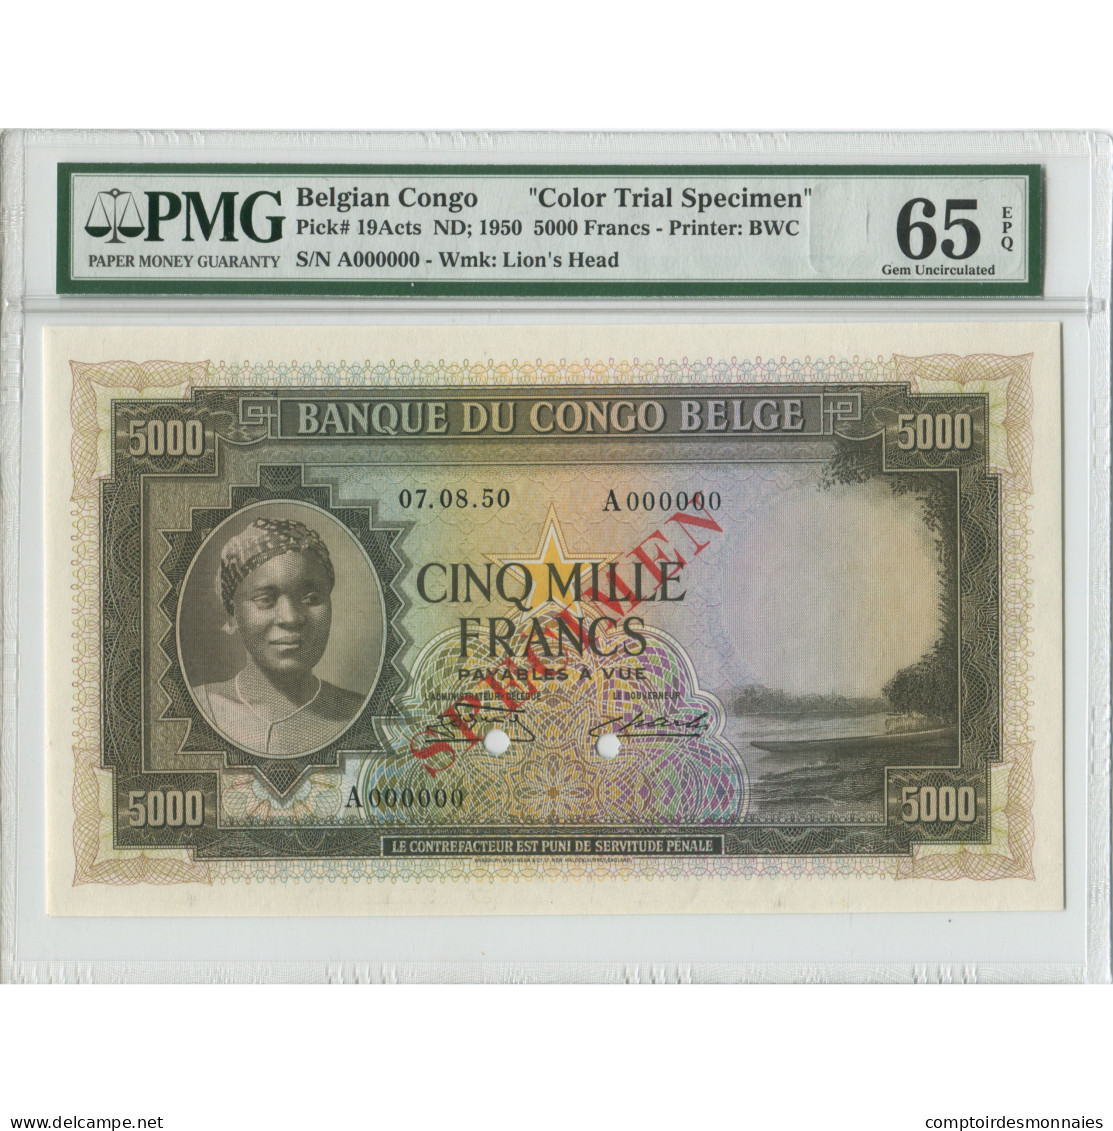 Billet, Congo Belge, 5000 Francs, 1950, 1950-08-07, Specimen Trial Color - Belgian Congo Bank